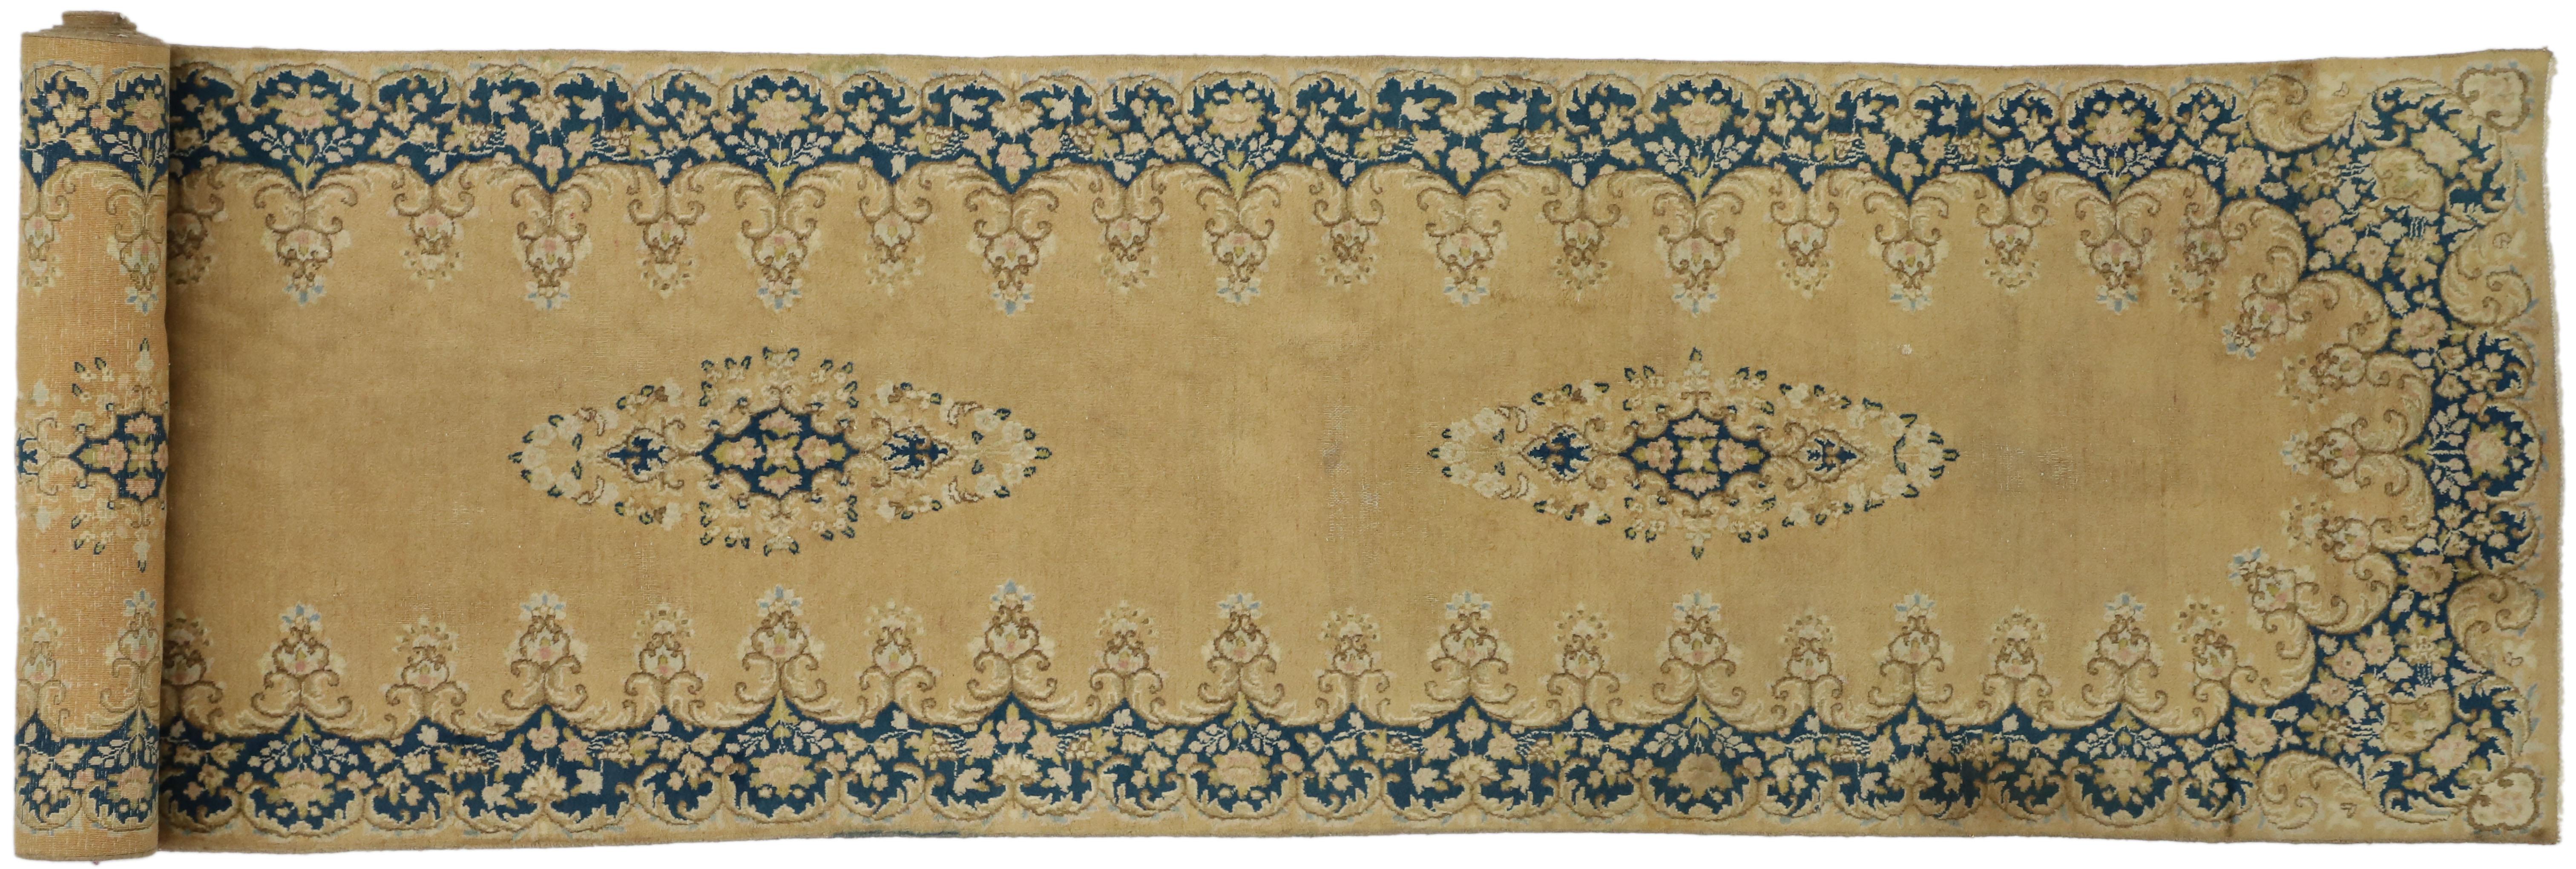 Vintage Persian Kerman Rug Carpet Runner  For Sale 2